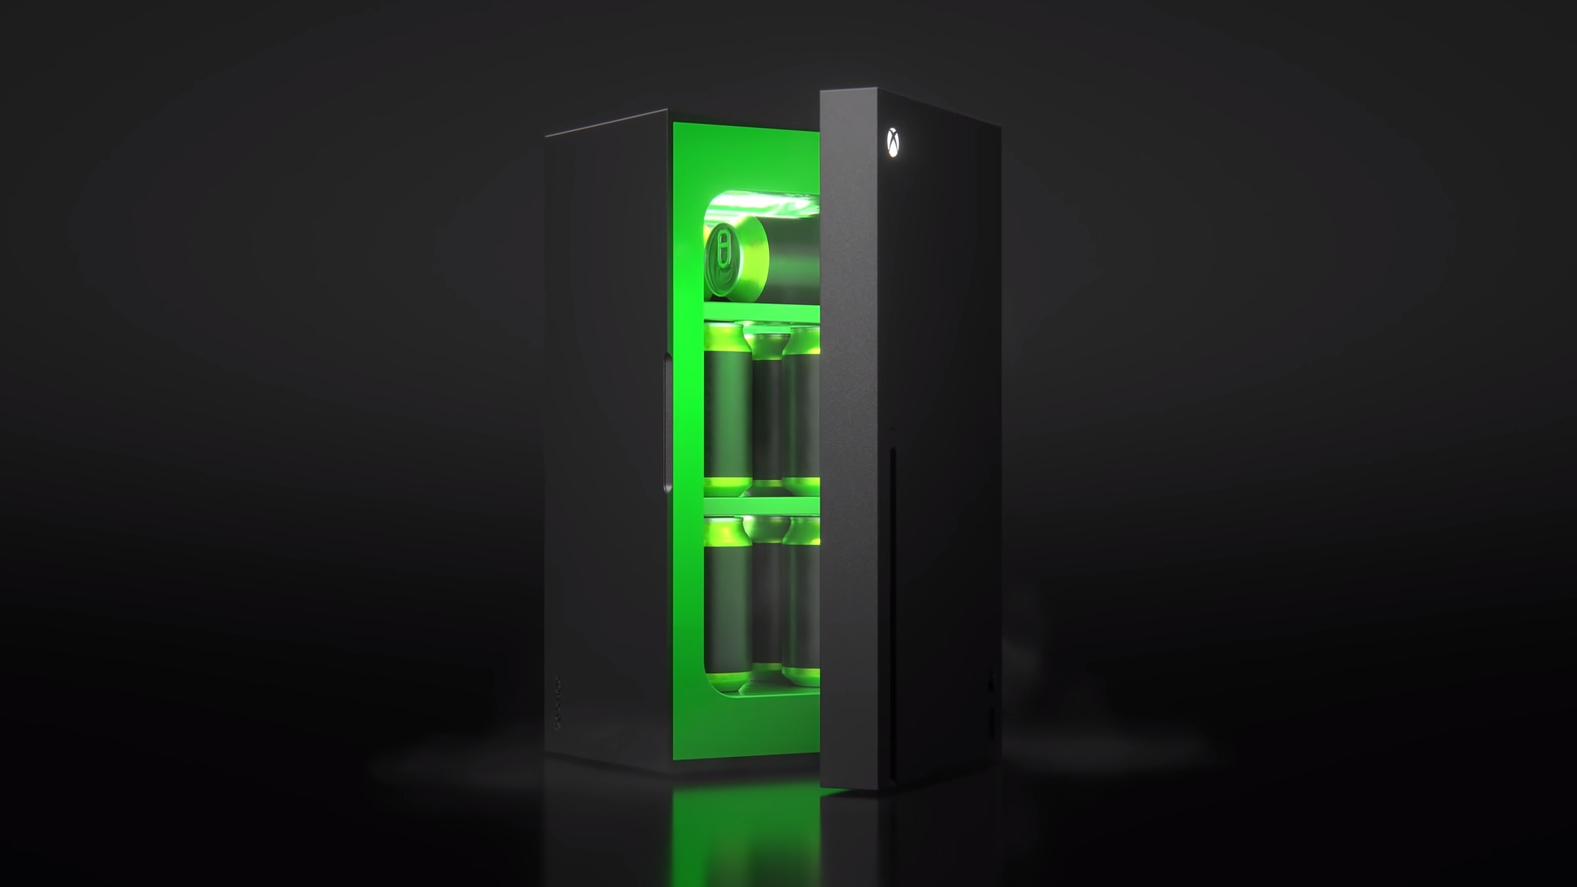 19 октября стартует предзаказ мини-холодильника в виде Xbox Series X